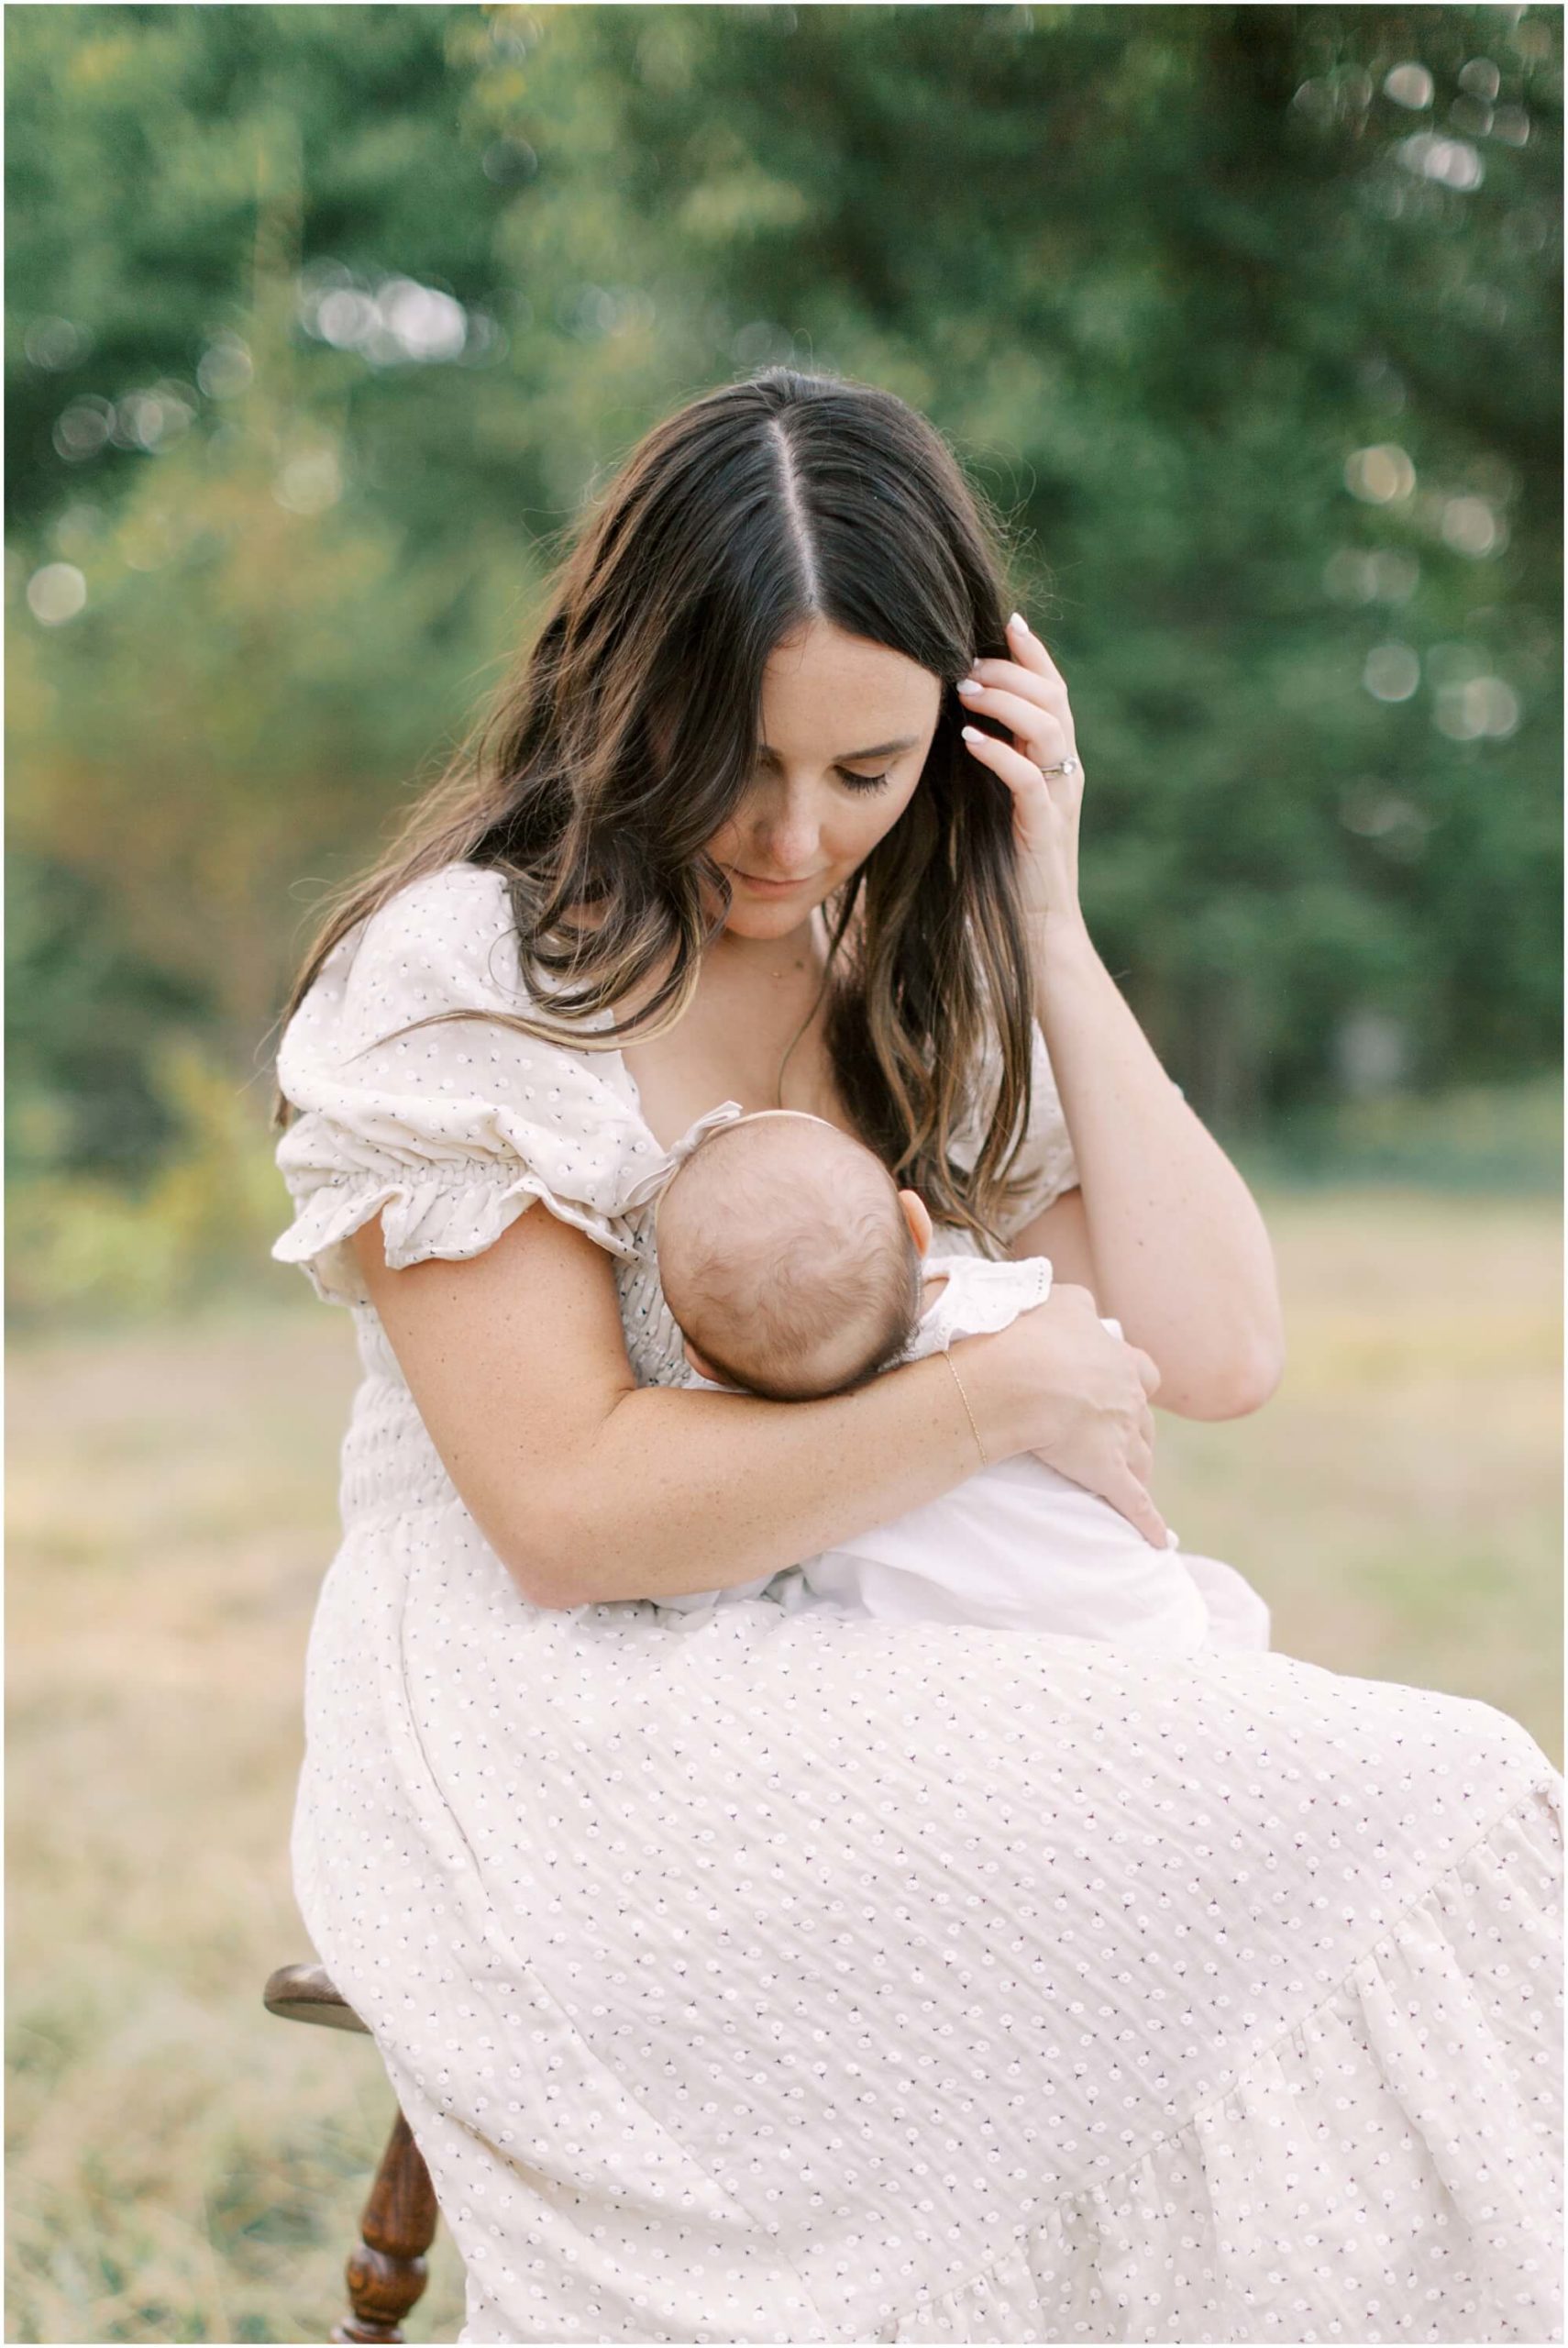 Mother breastfeeding her baby girl